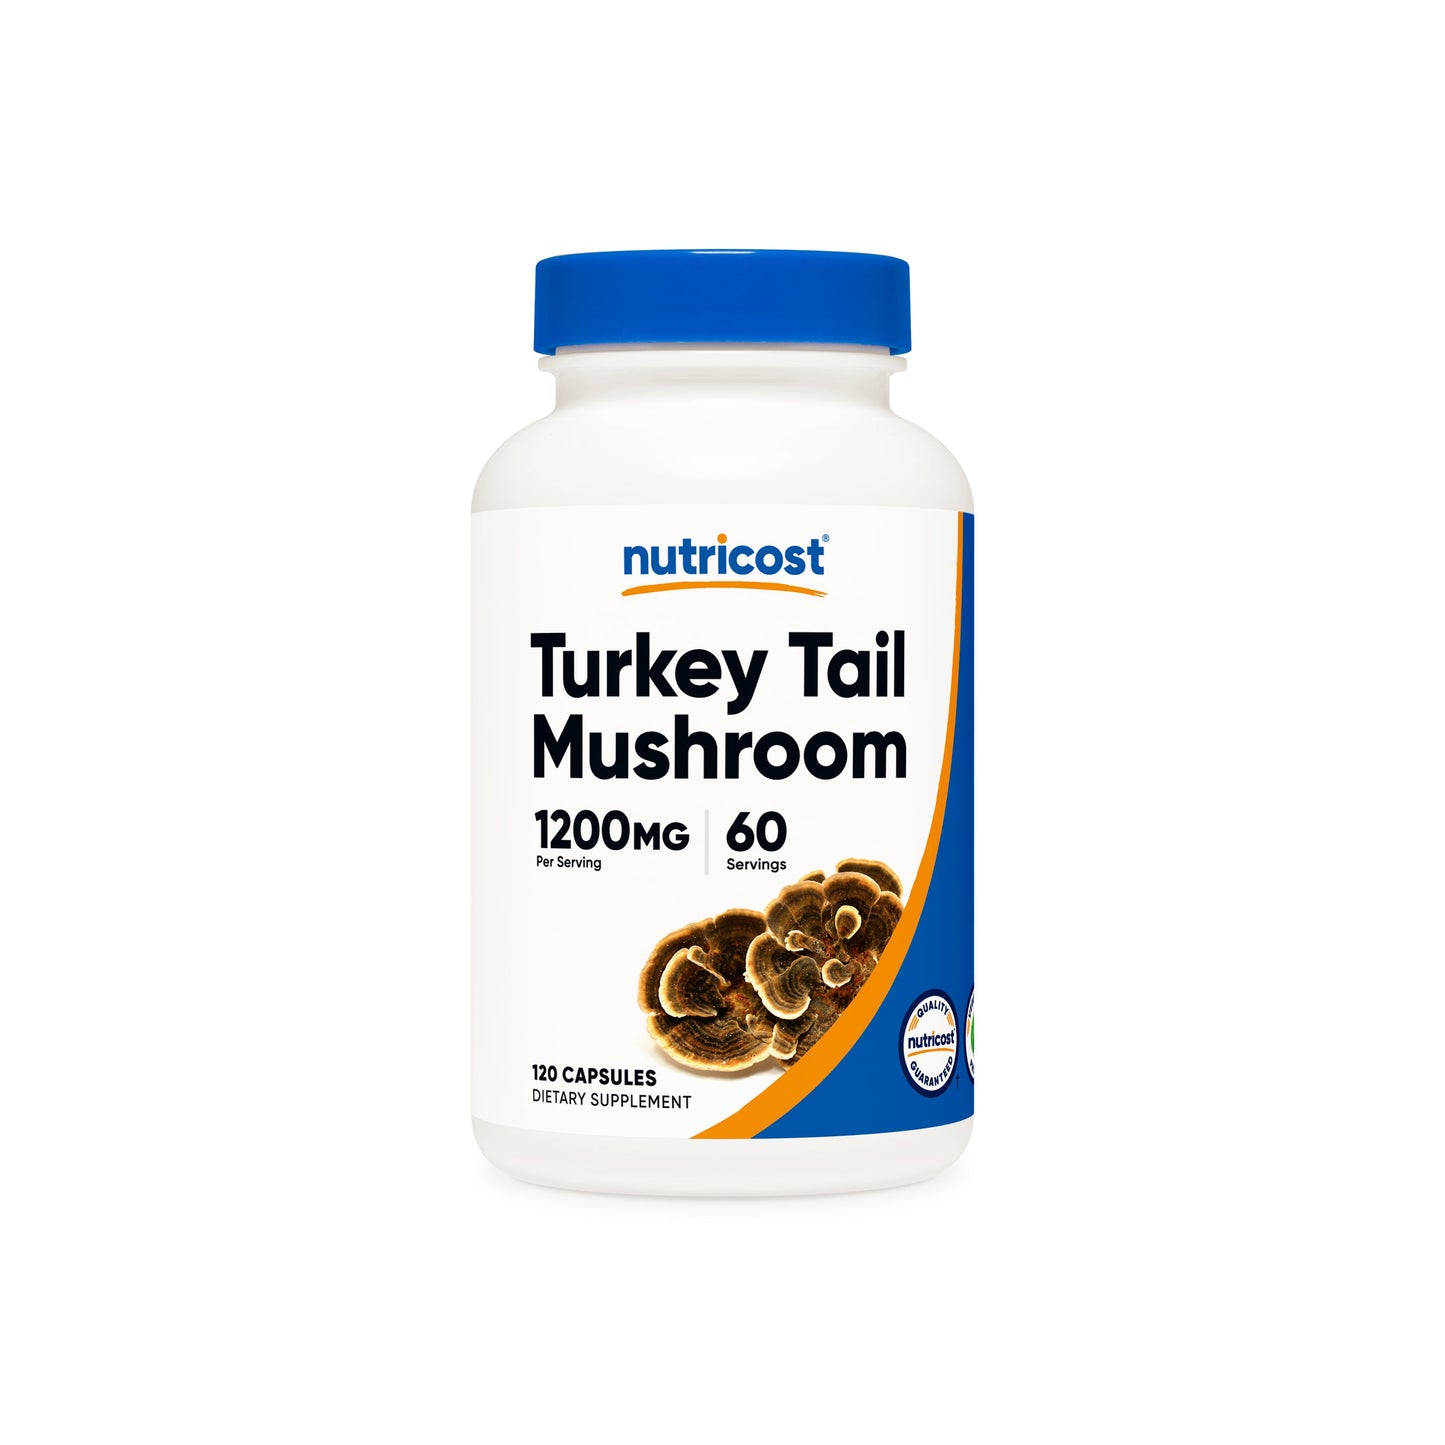 Nutricost Turkey Tail Mushroom Capsules